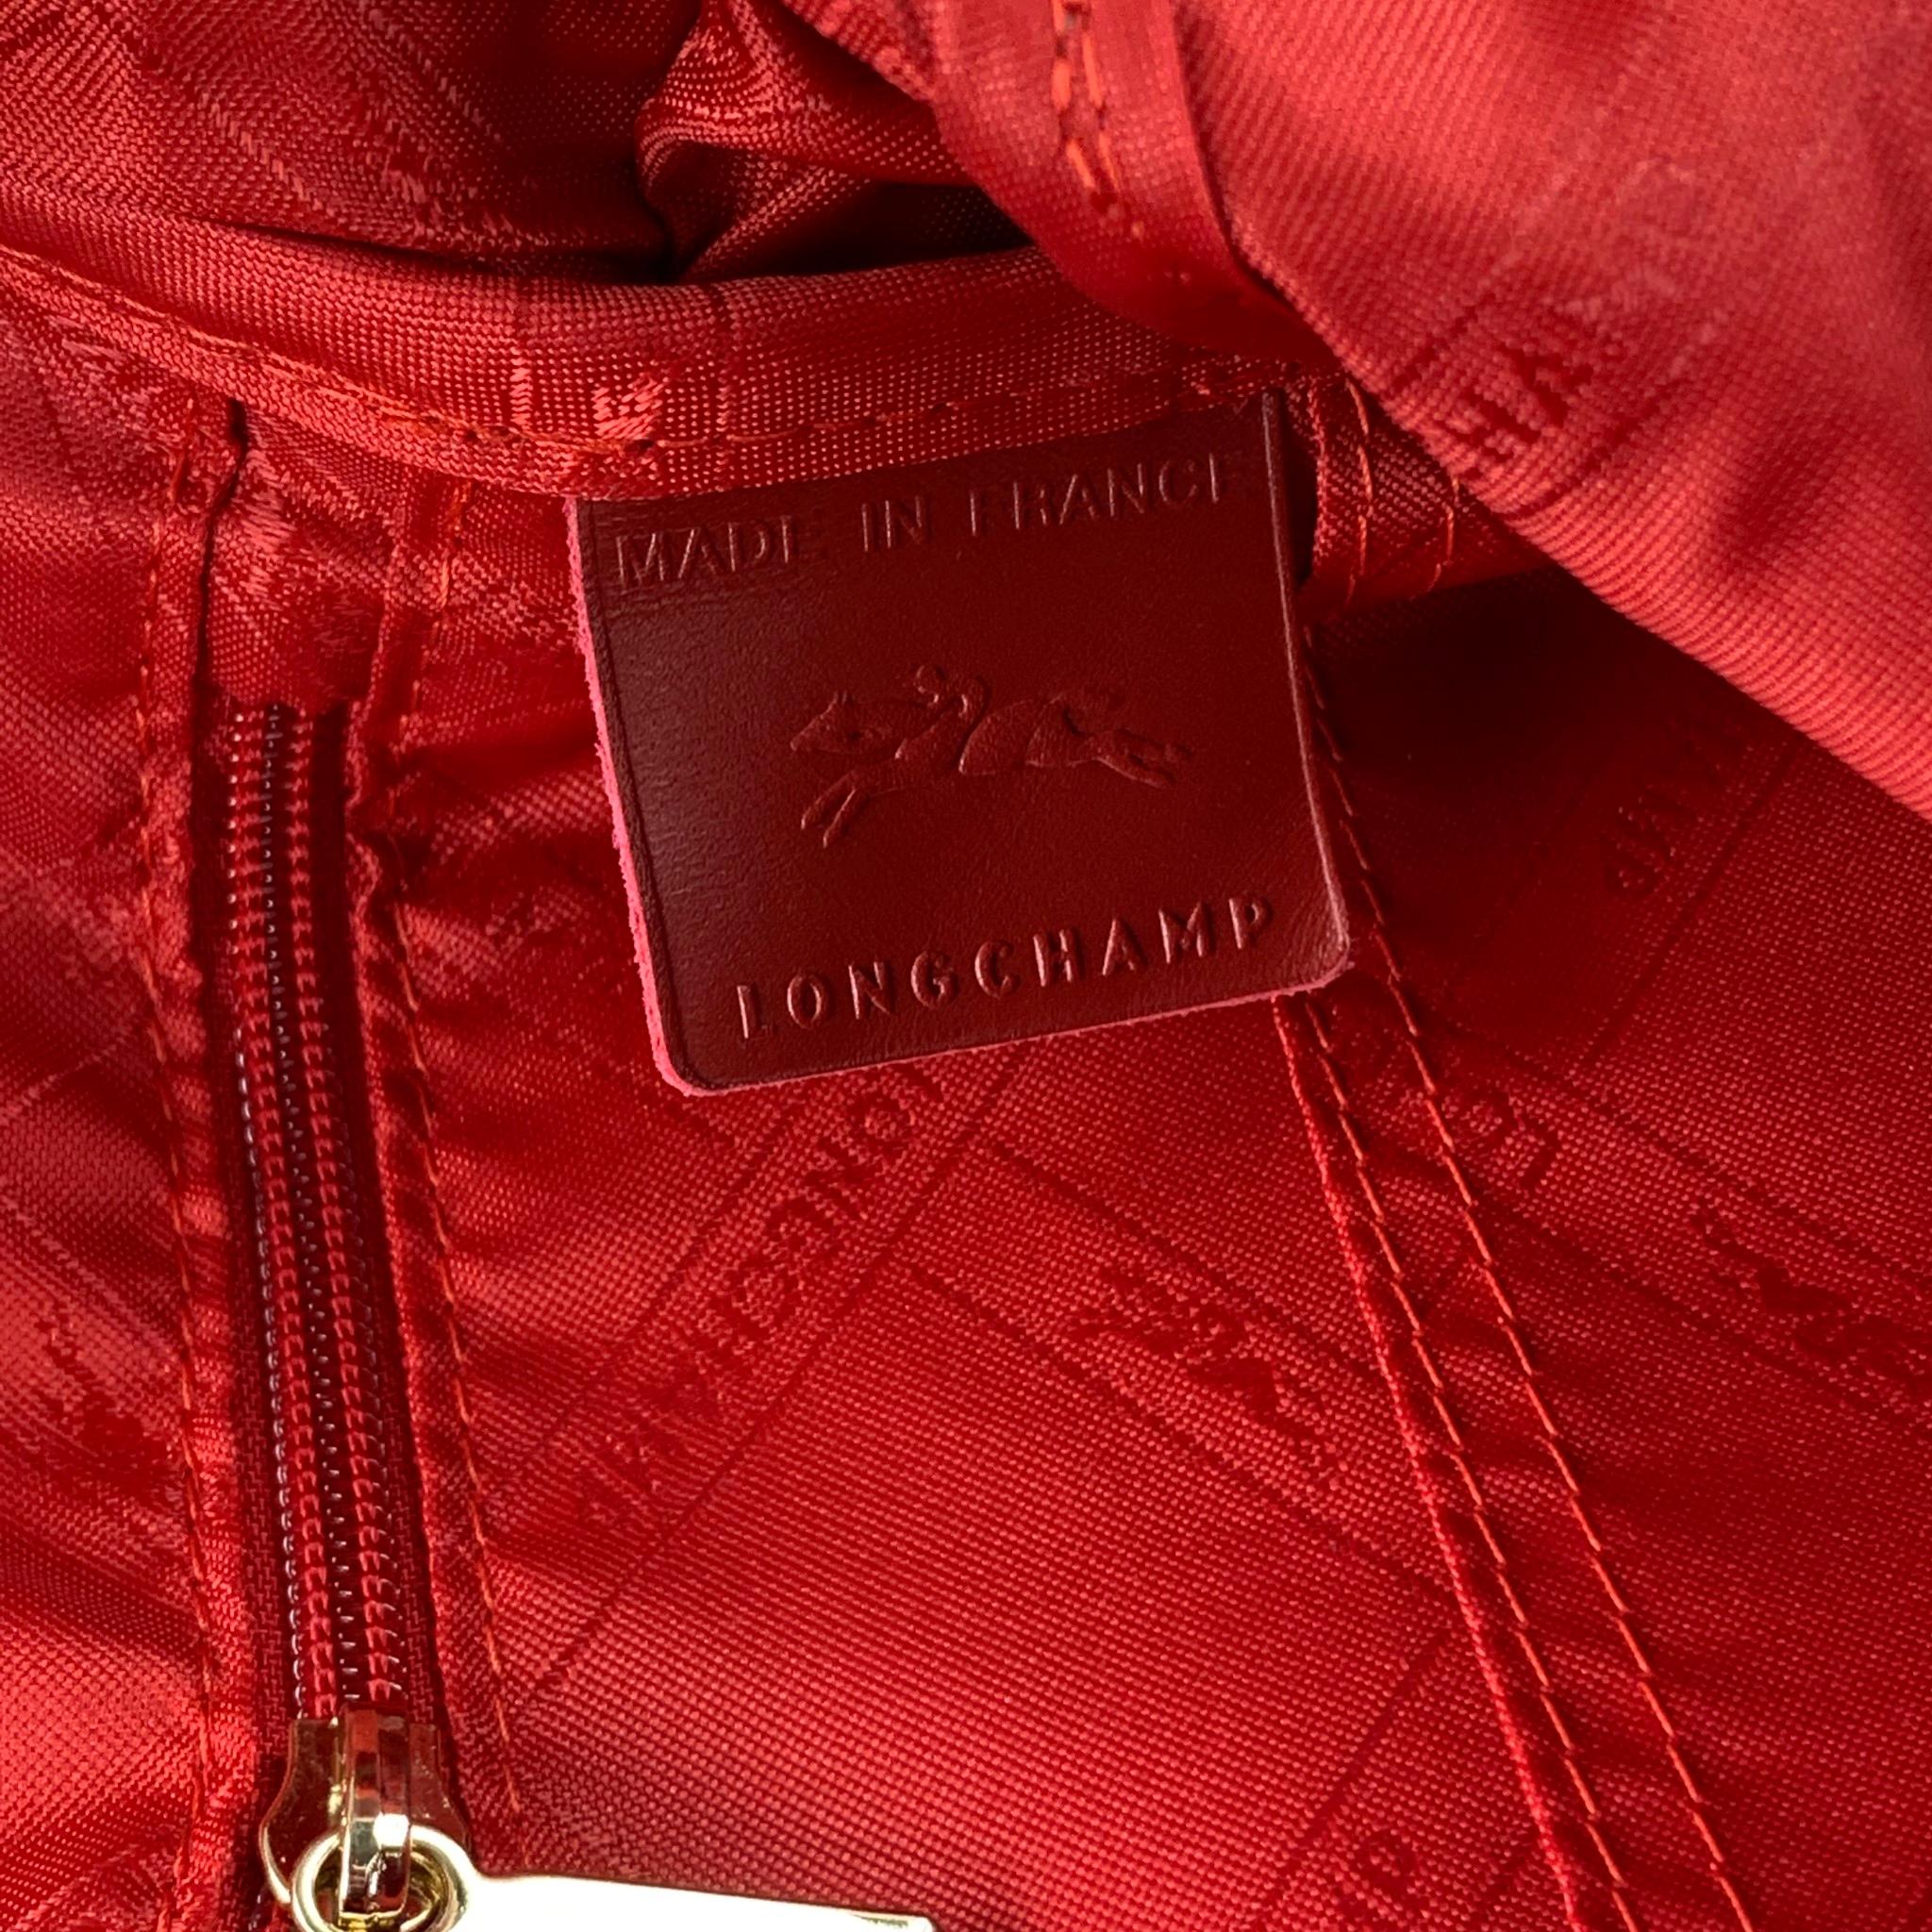 Women's LONGCHAMP Red Leather Tote Handbag